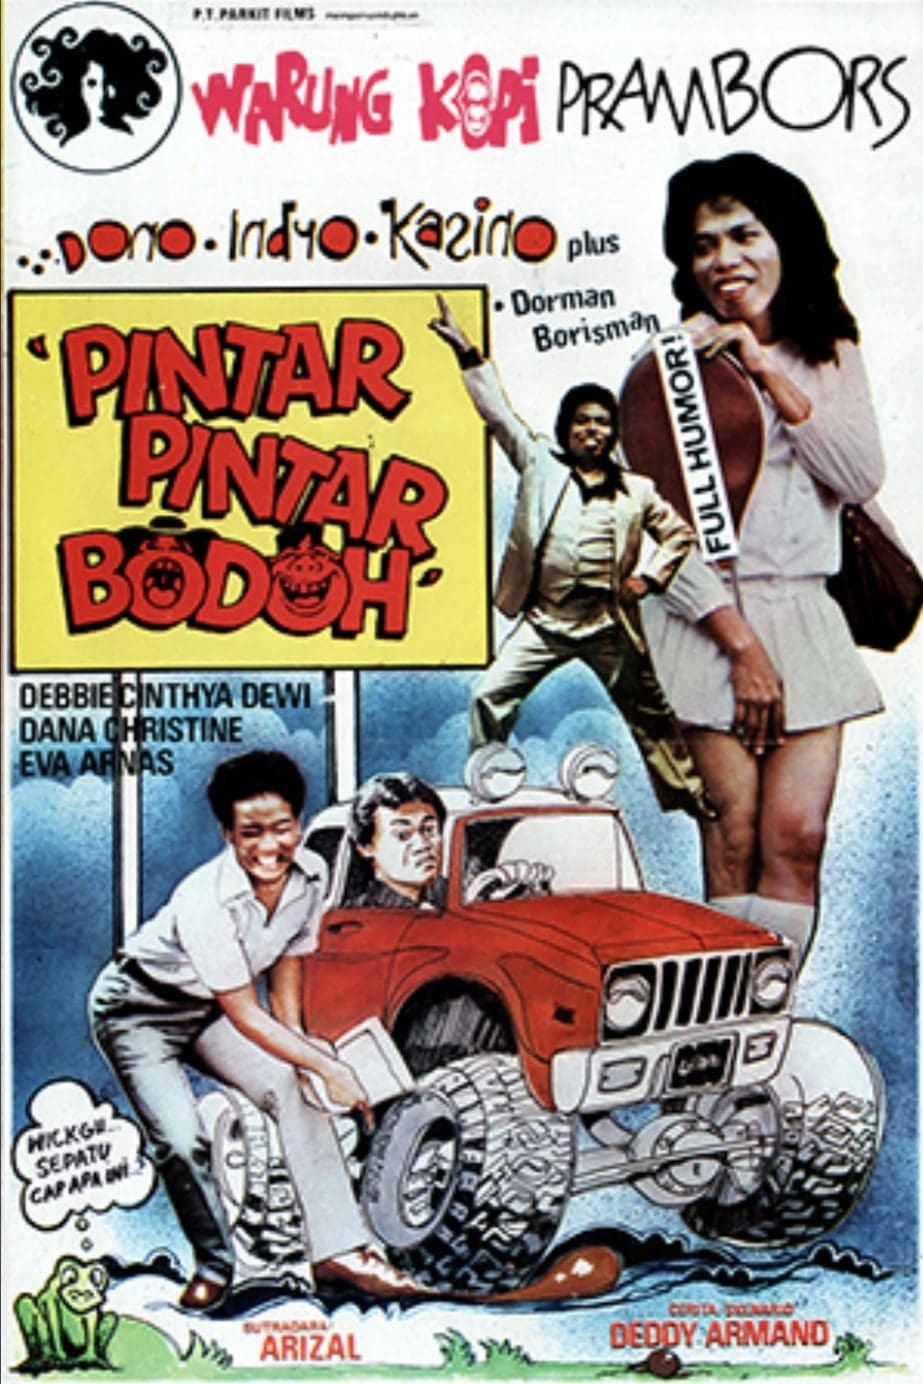 Pintar Pintar Bodoh (1980)